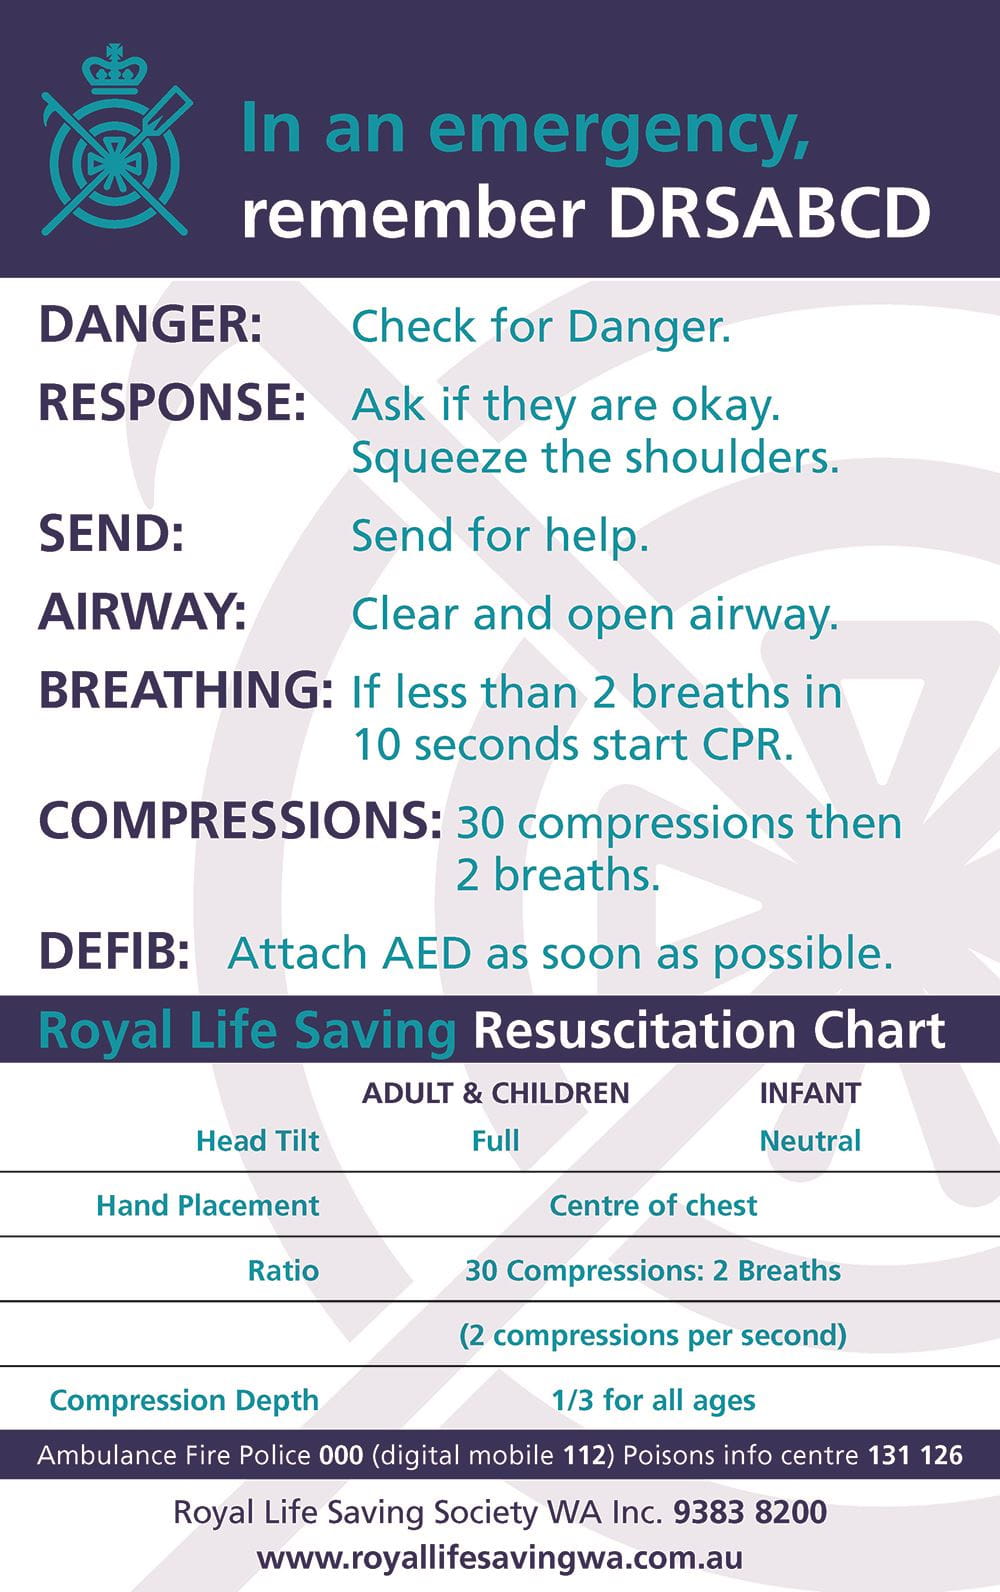 DRSABCD emergency action plan by Royal Life Saving WA